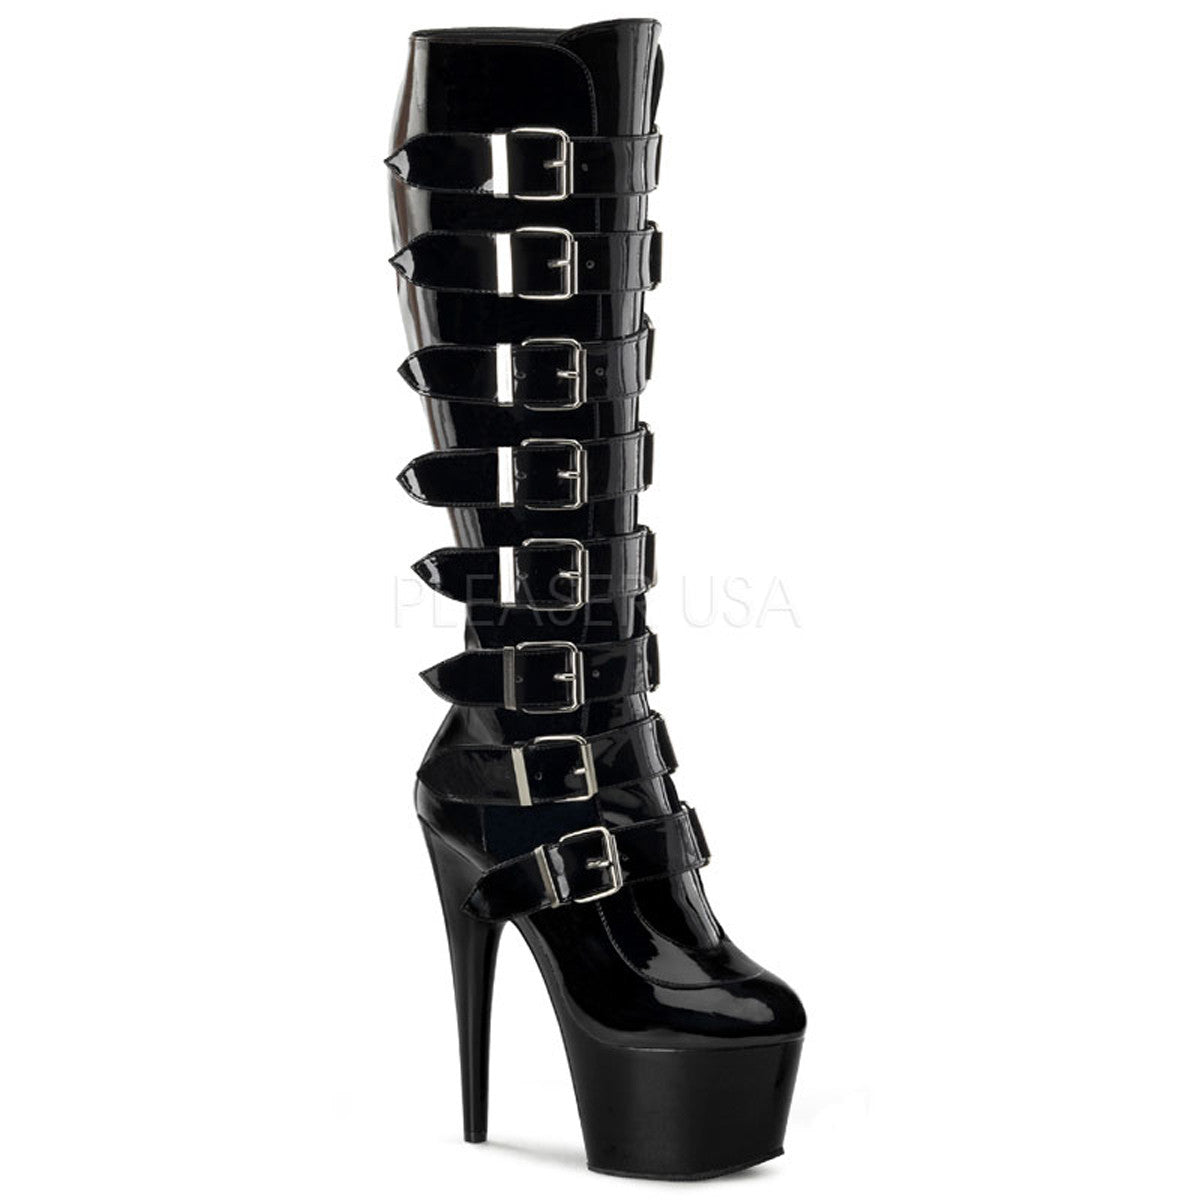 PLEASER ADORE-2043 Black Pat Knee High Boots - Shoecup.com - 1